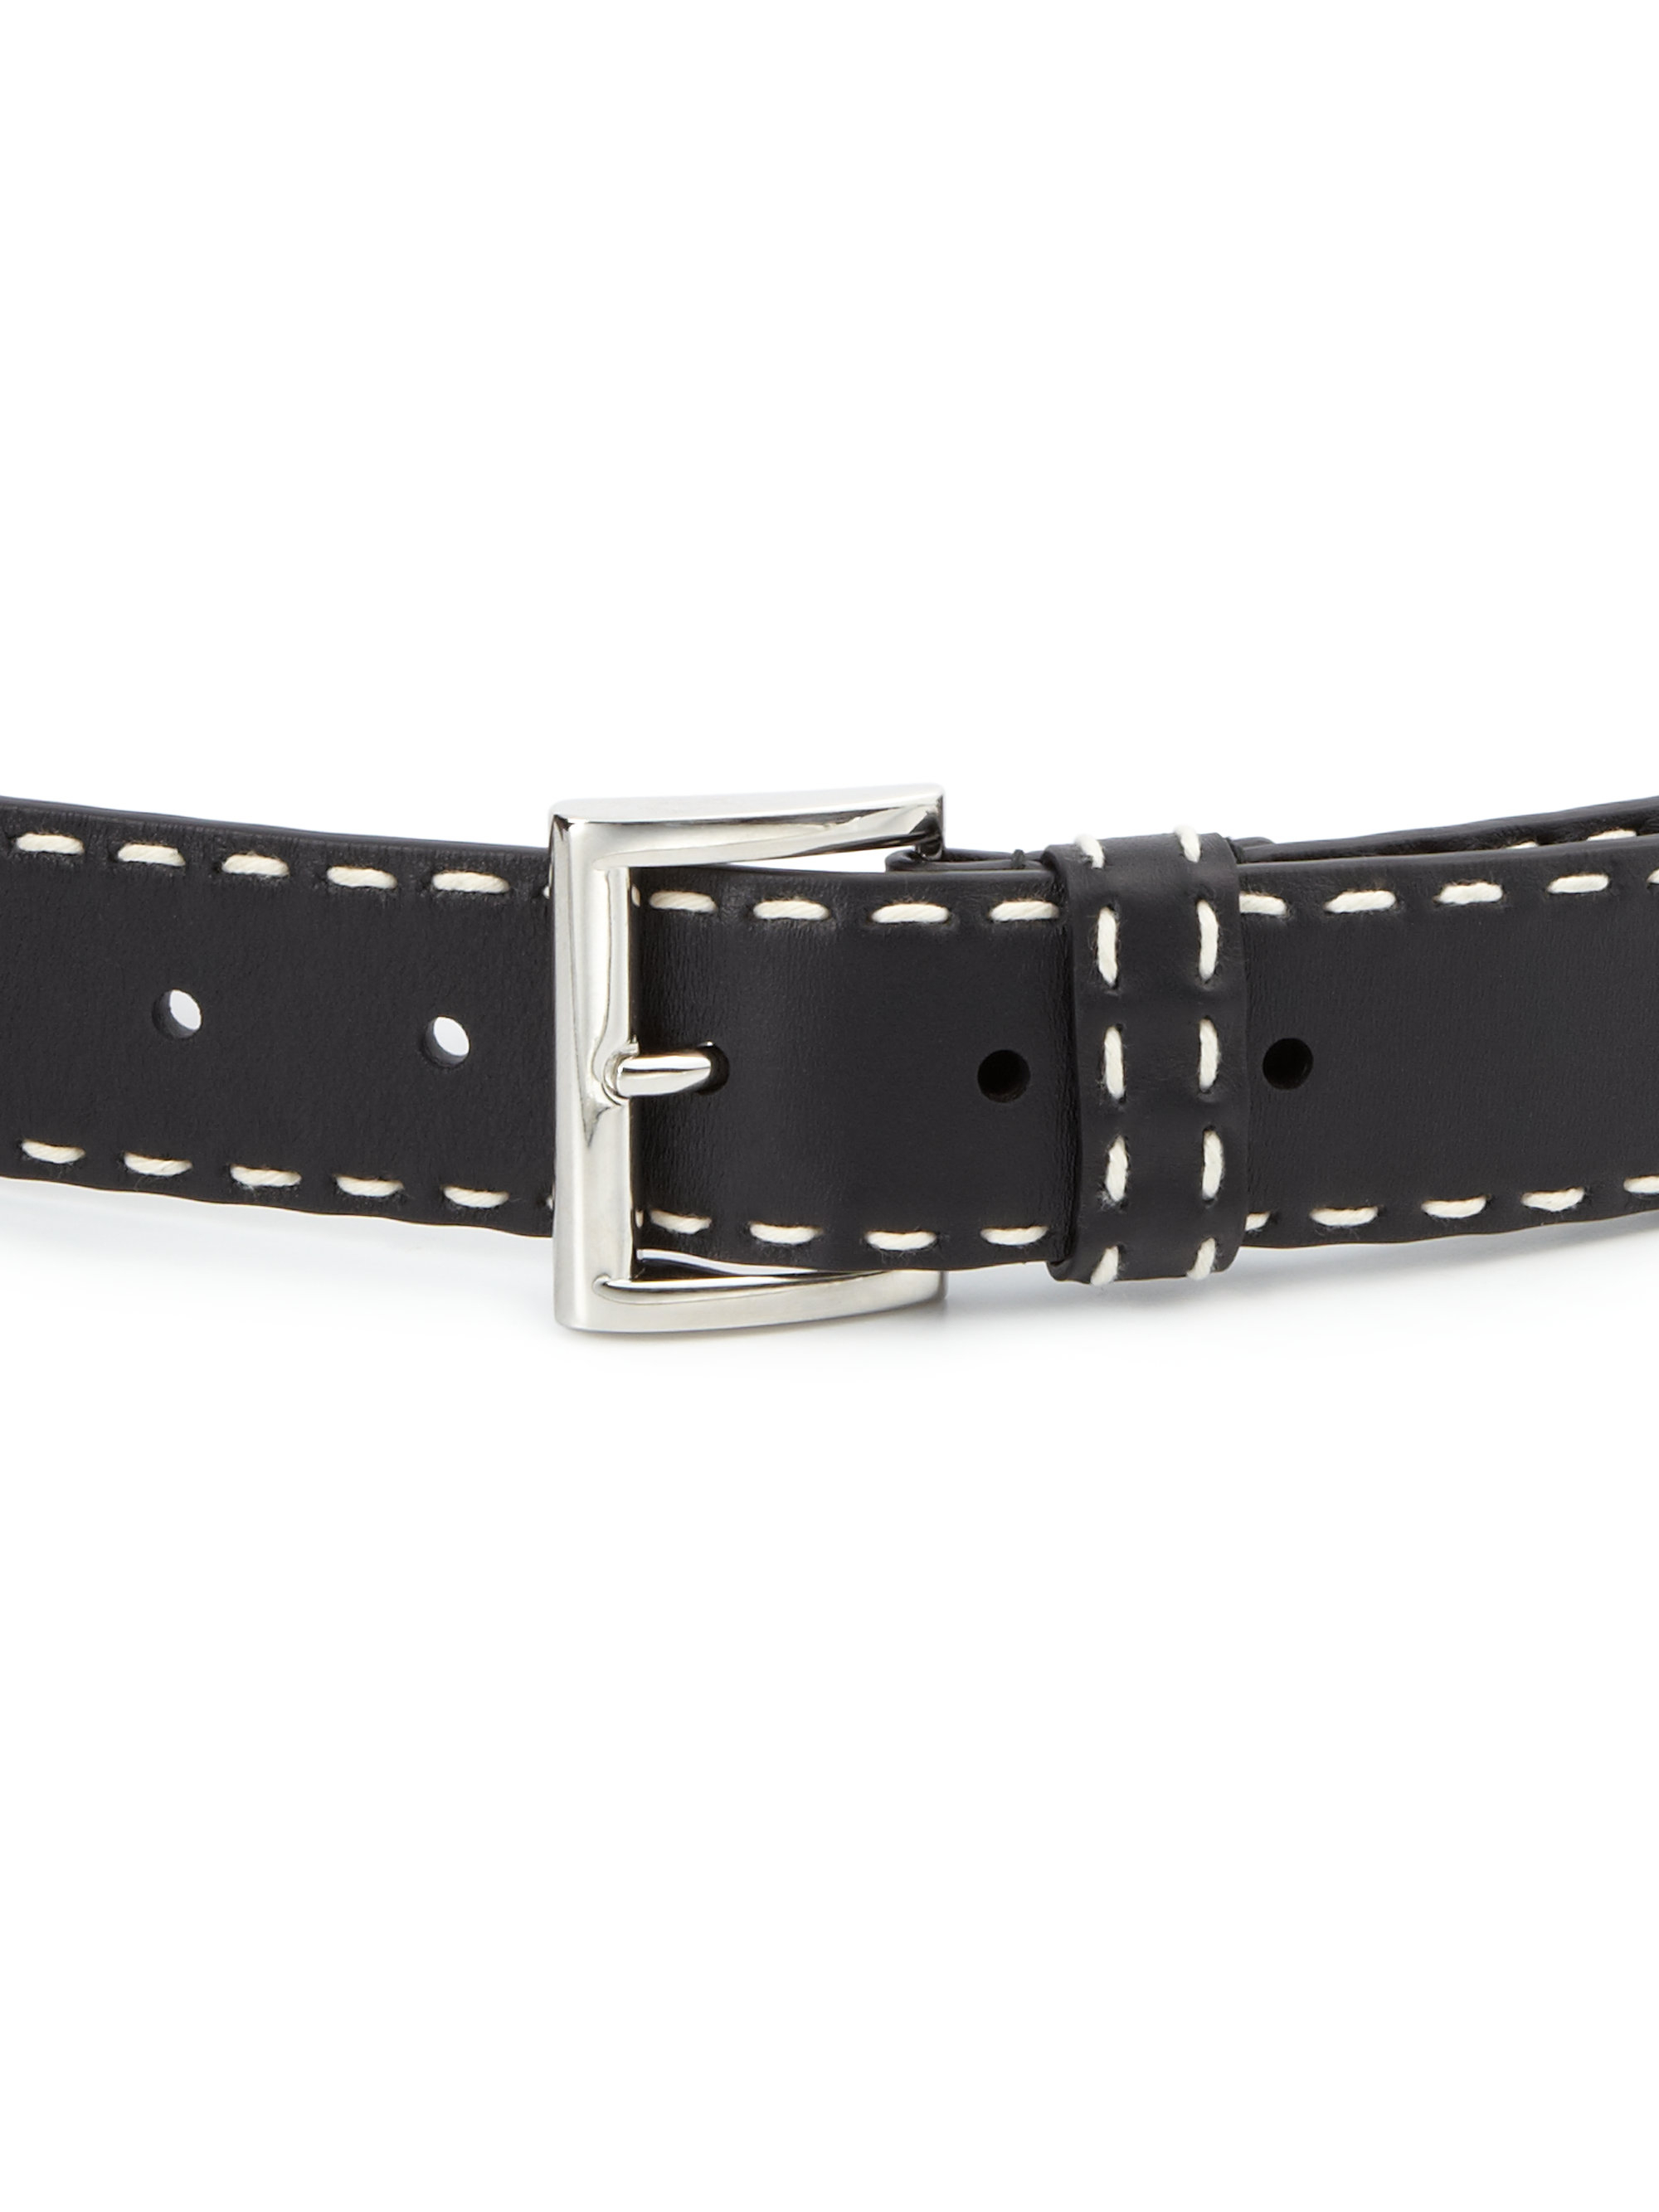 Prada Contrast-stitched Leather Belt in Black | Lyst  